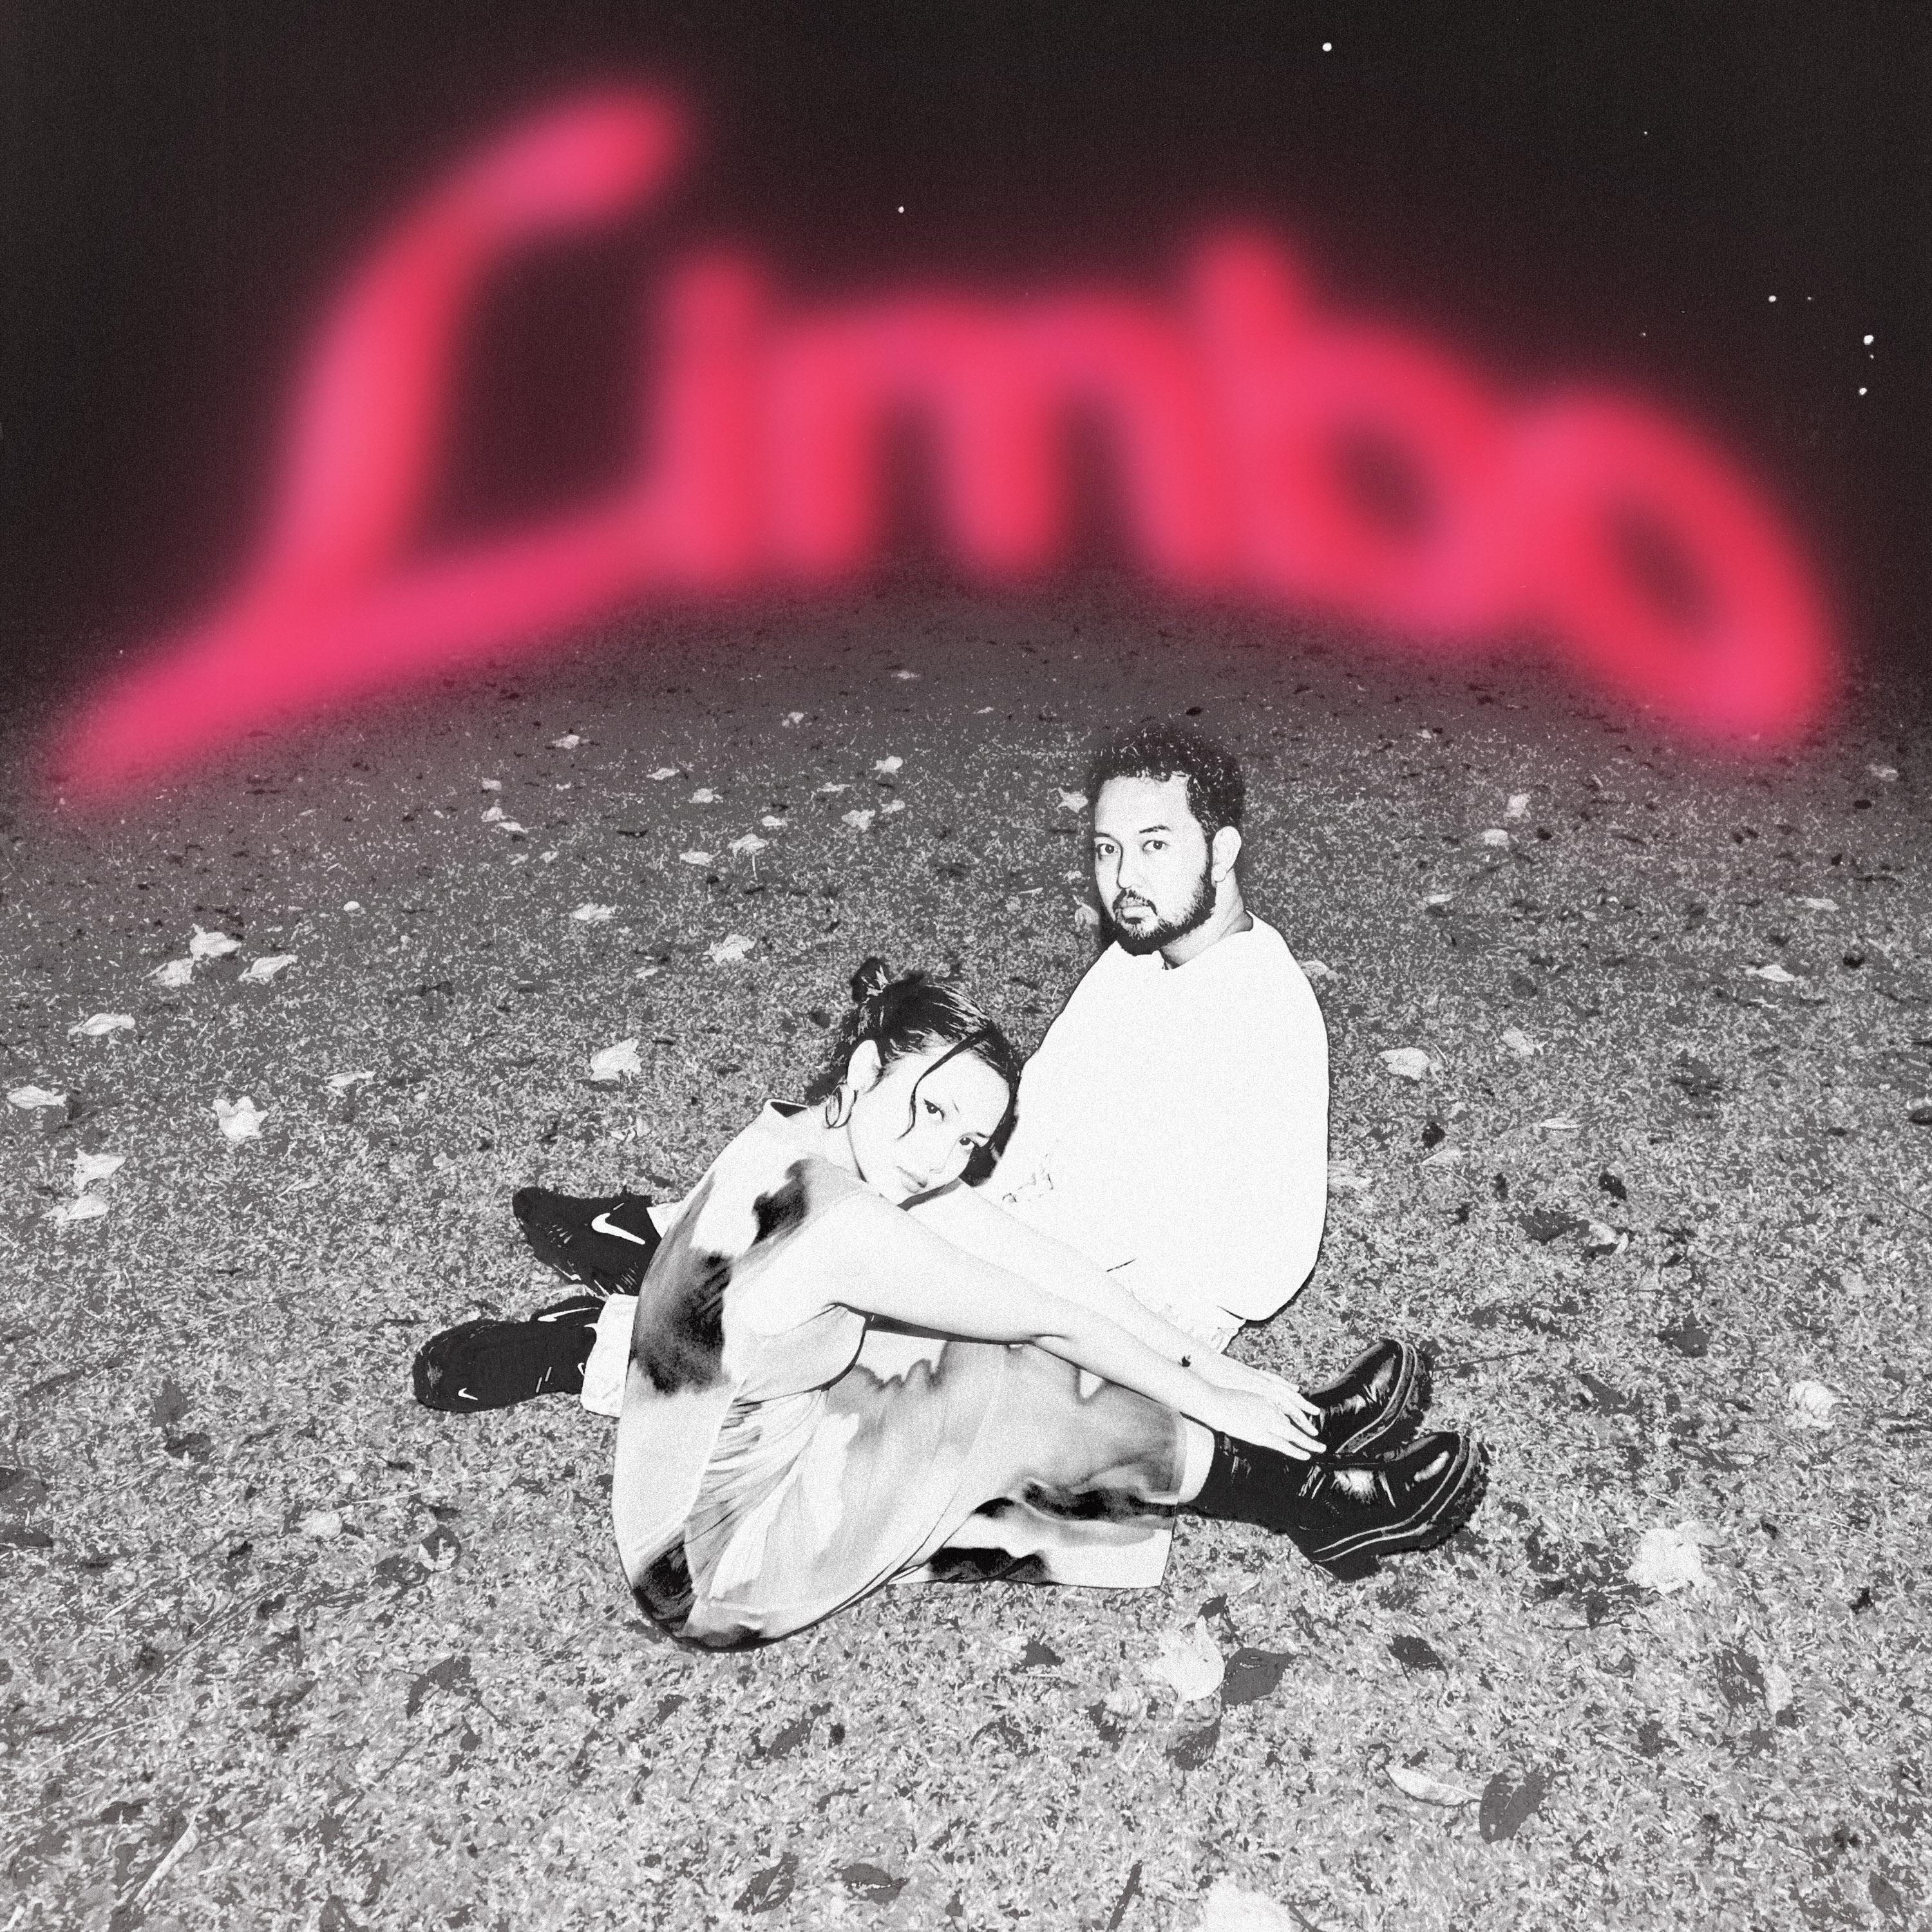 Постер альбома LIMBO